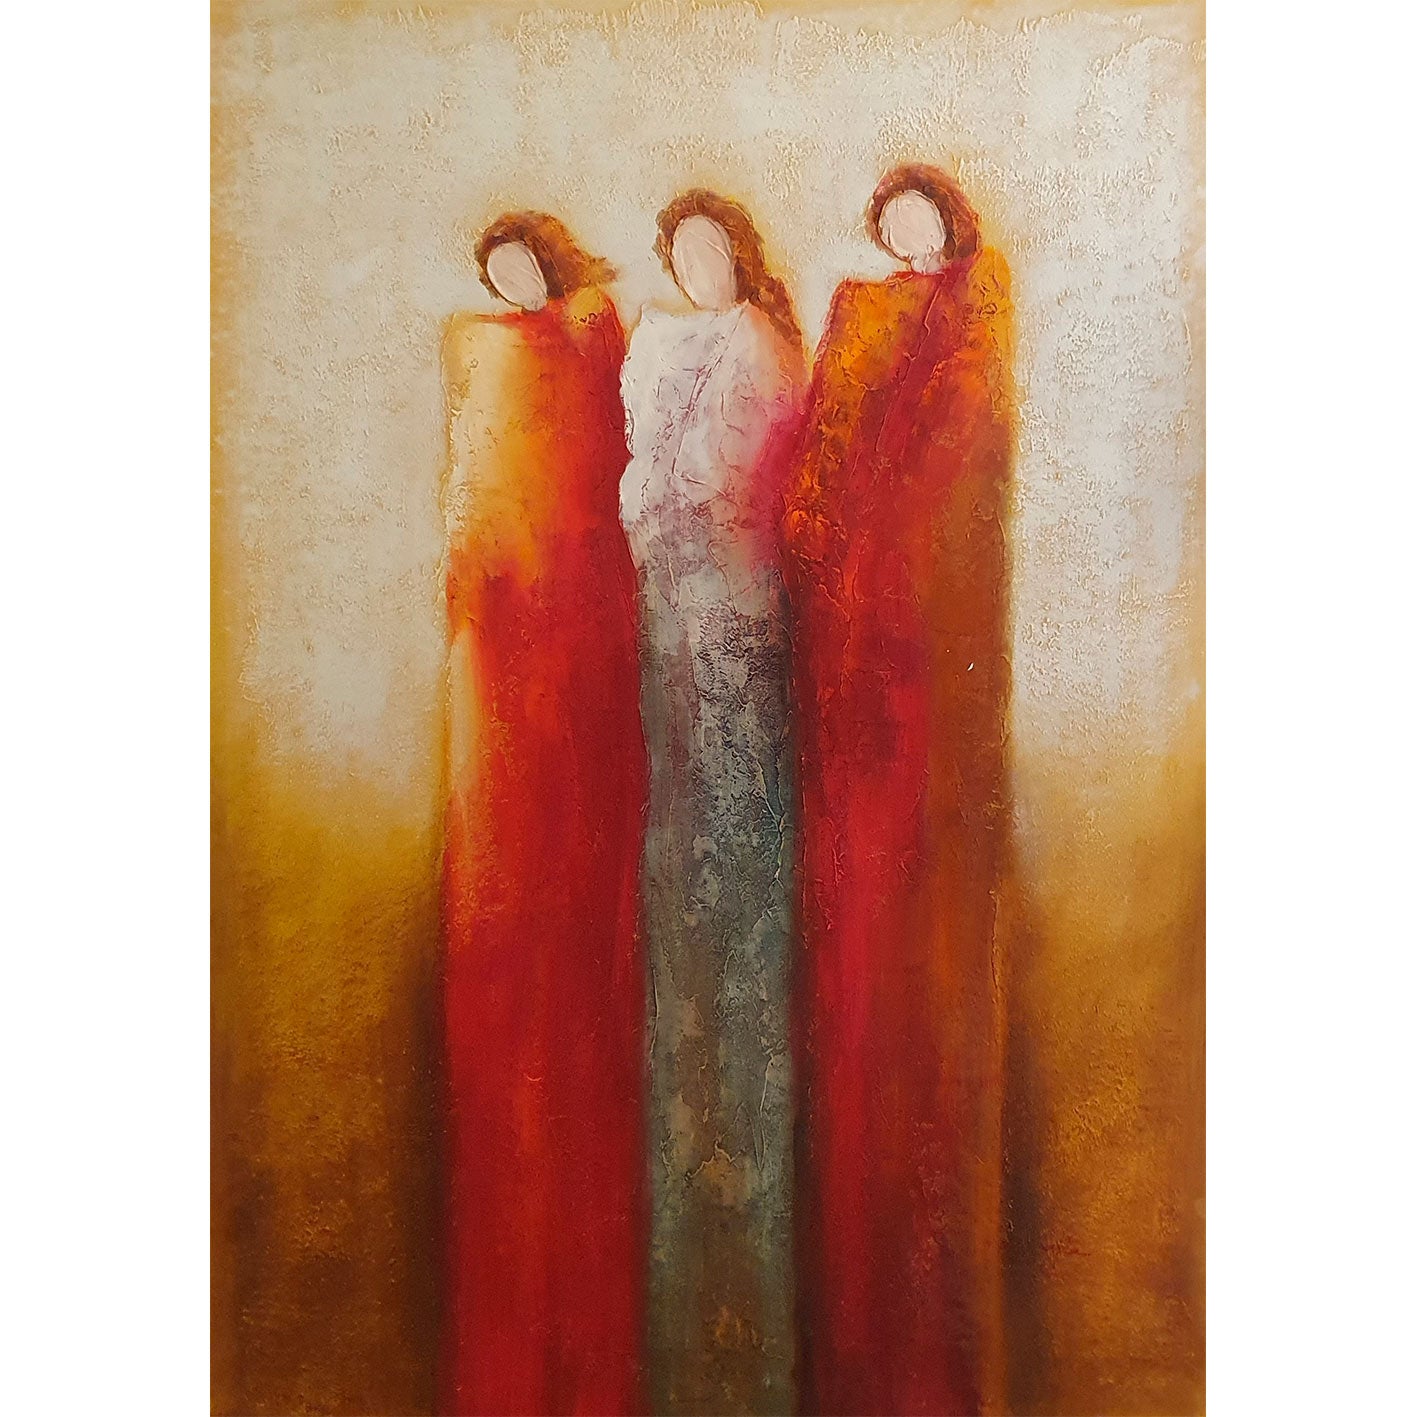 Frauenfiguren Gemälde 60x90 cm